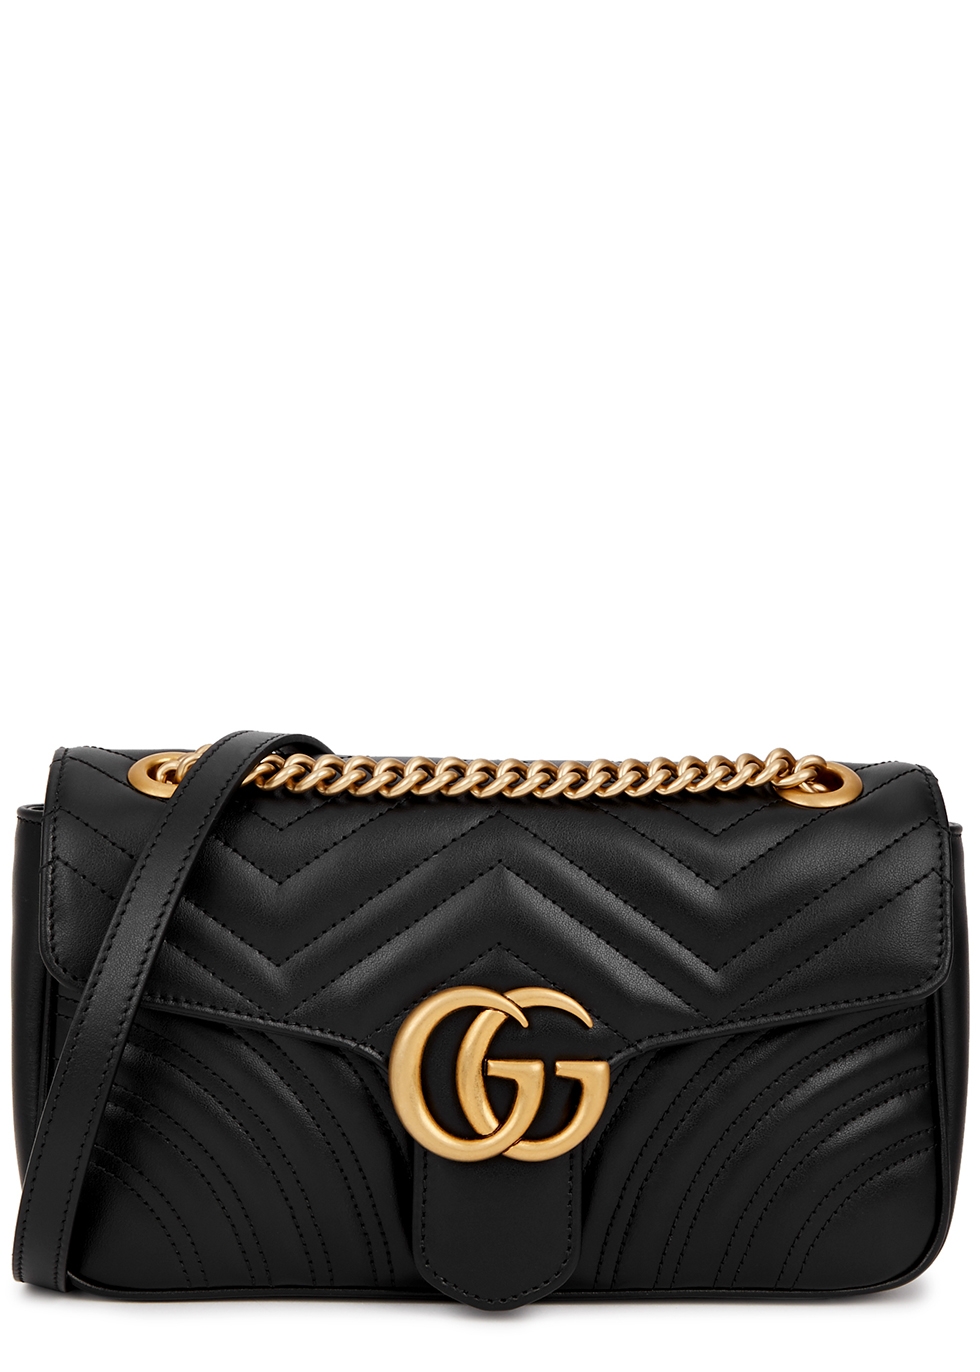 Gucci GG Marmont small leather shoulder bag - Harvey Nichols